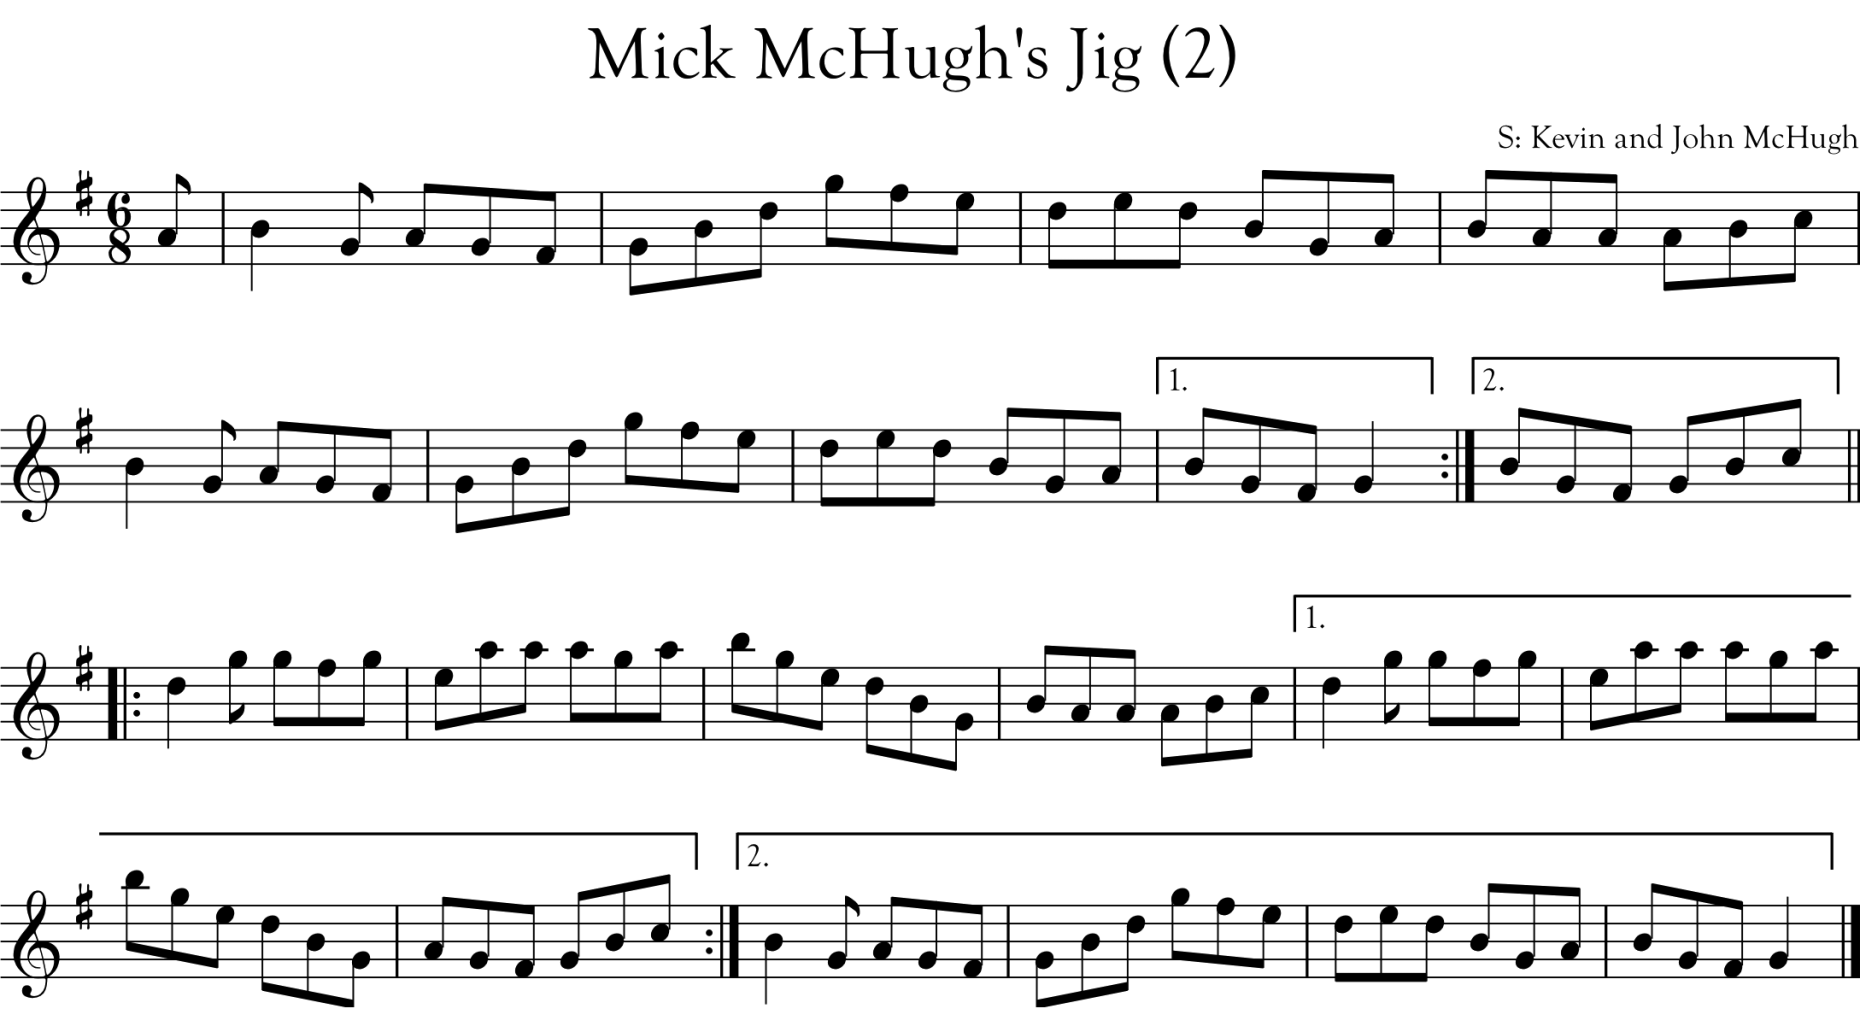 Mike McHugh's Jig (2) – Music of Mayo